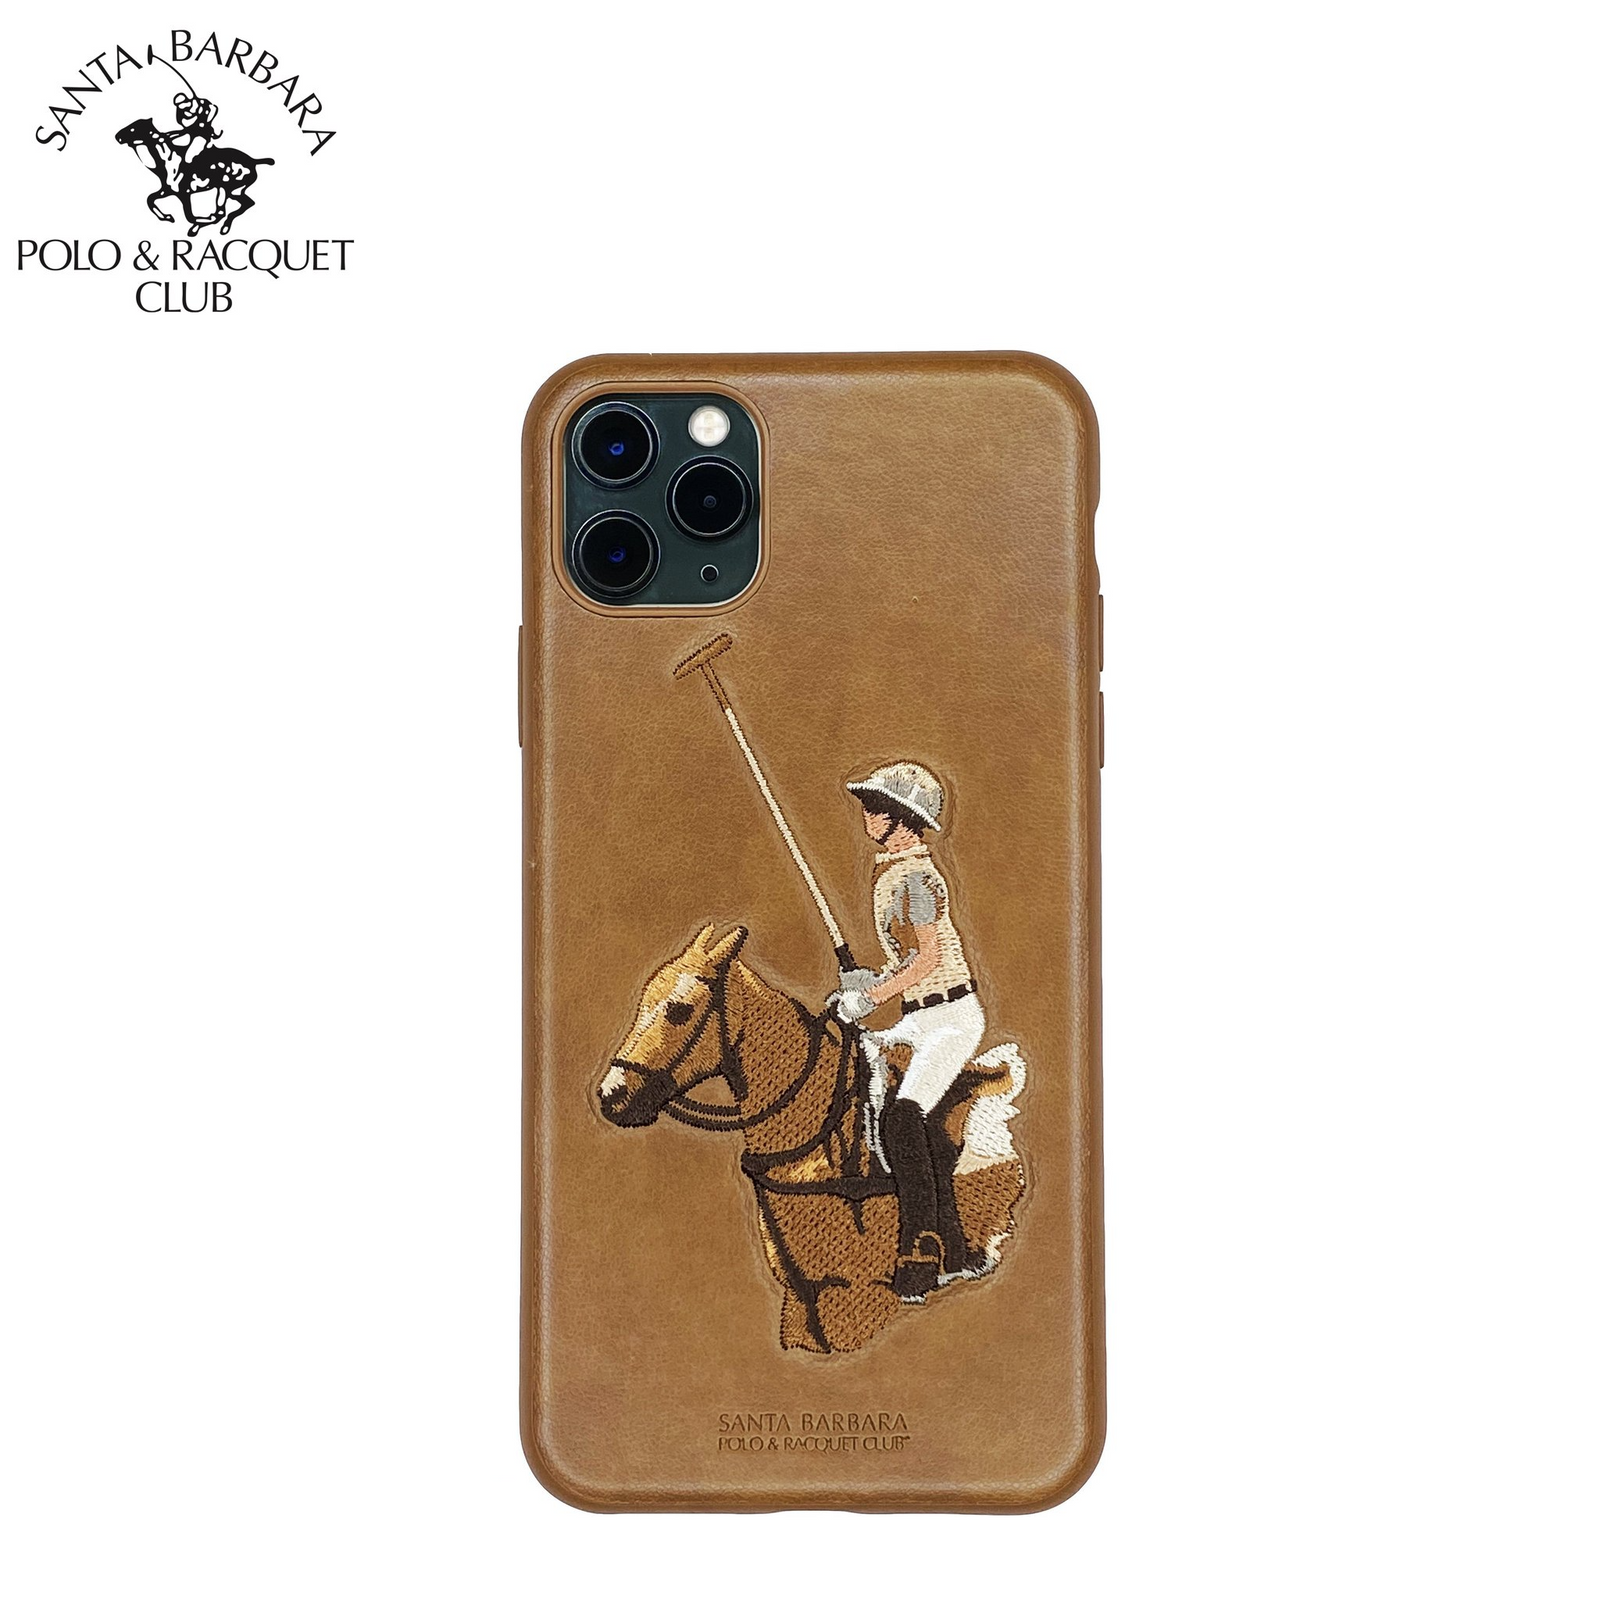 Santa Barbara Polo & Racquet Club Jockey Series Genuine Leather Case Cover for Apple iPhone 11 6.1"